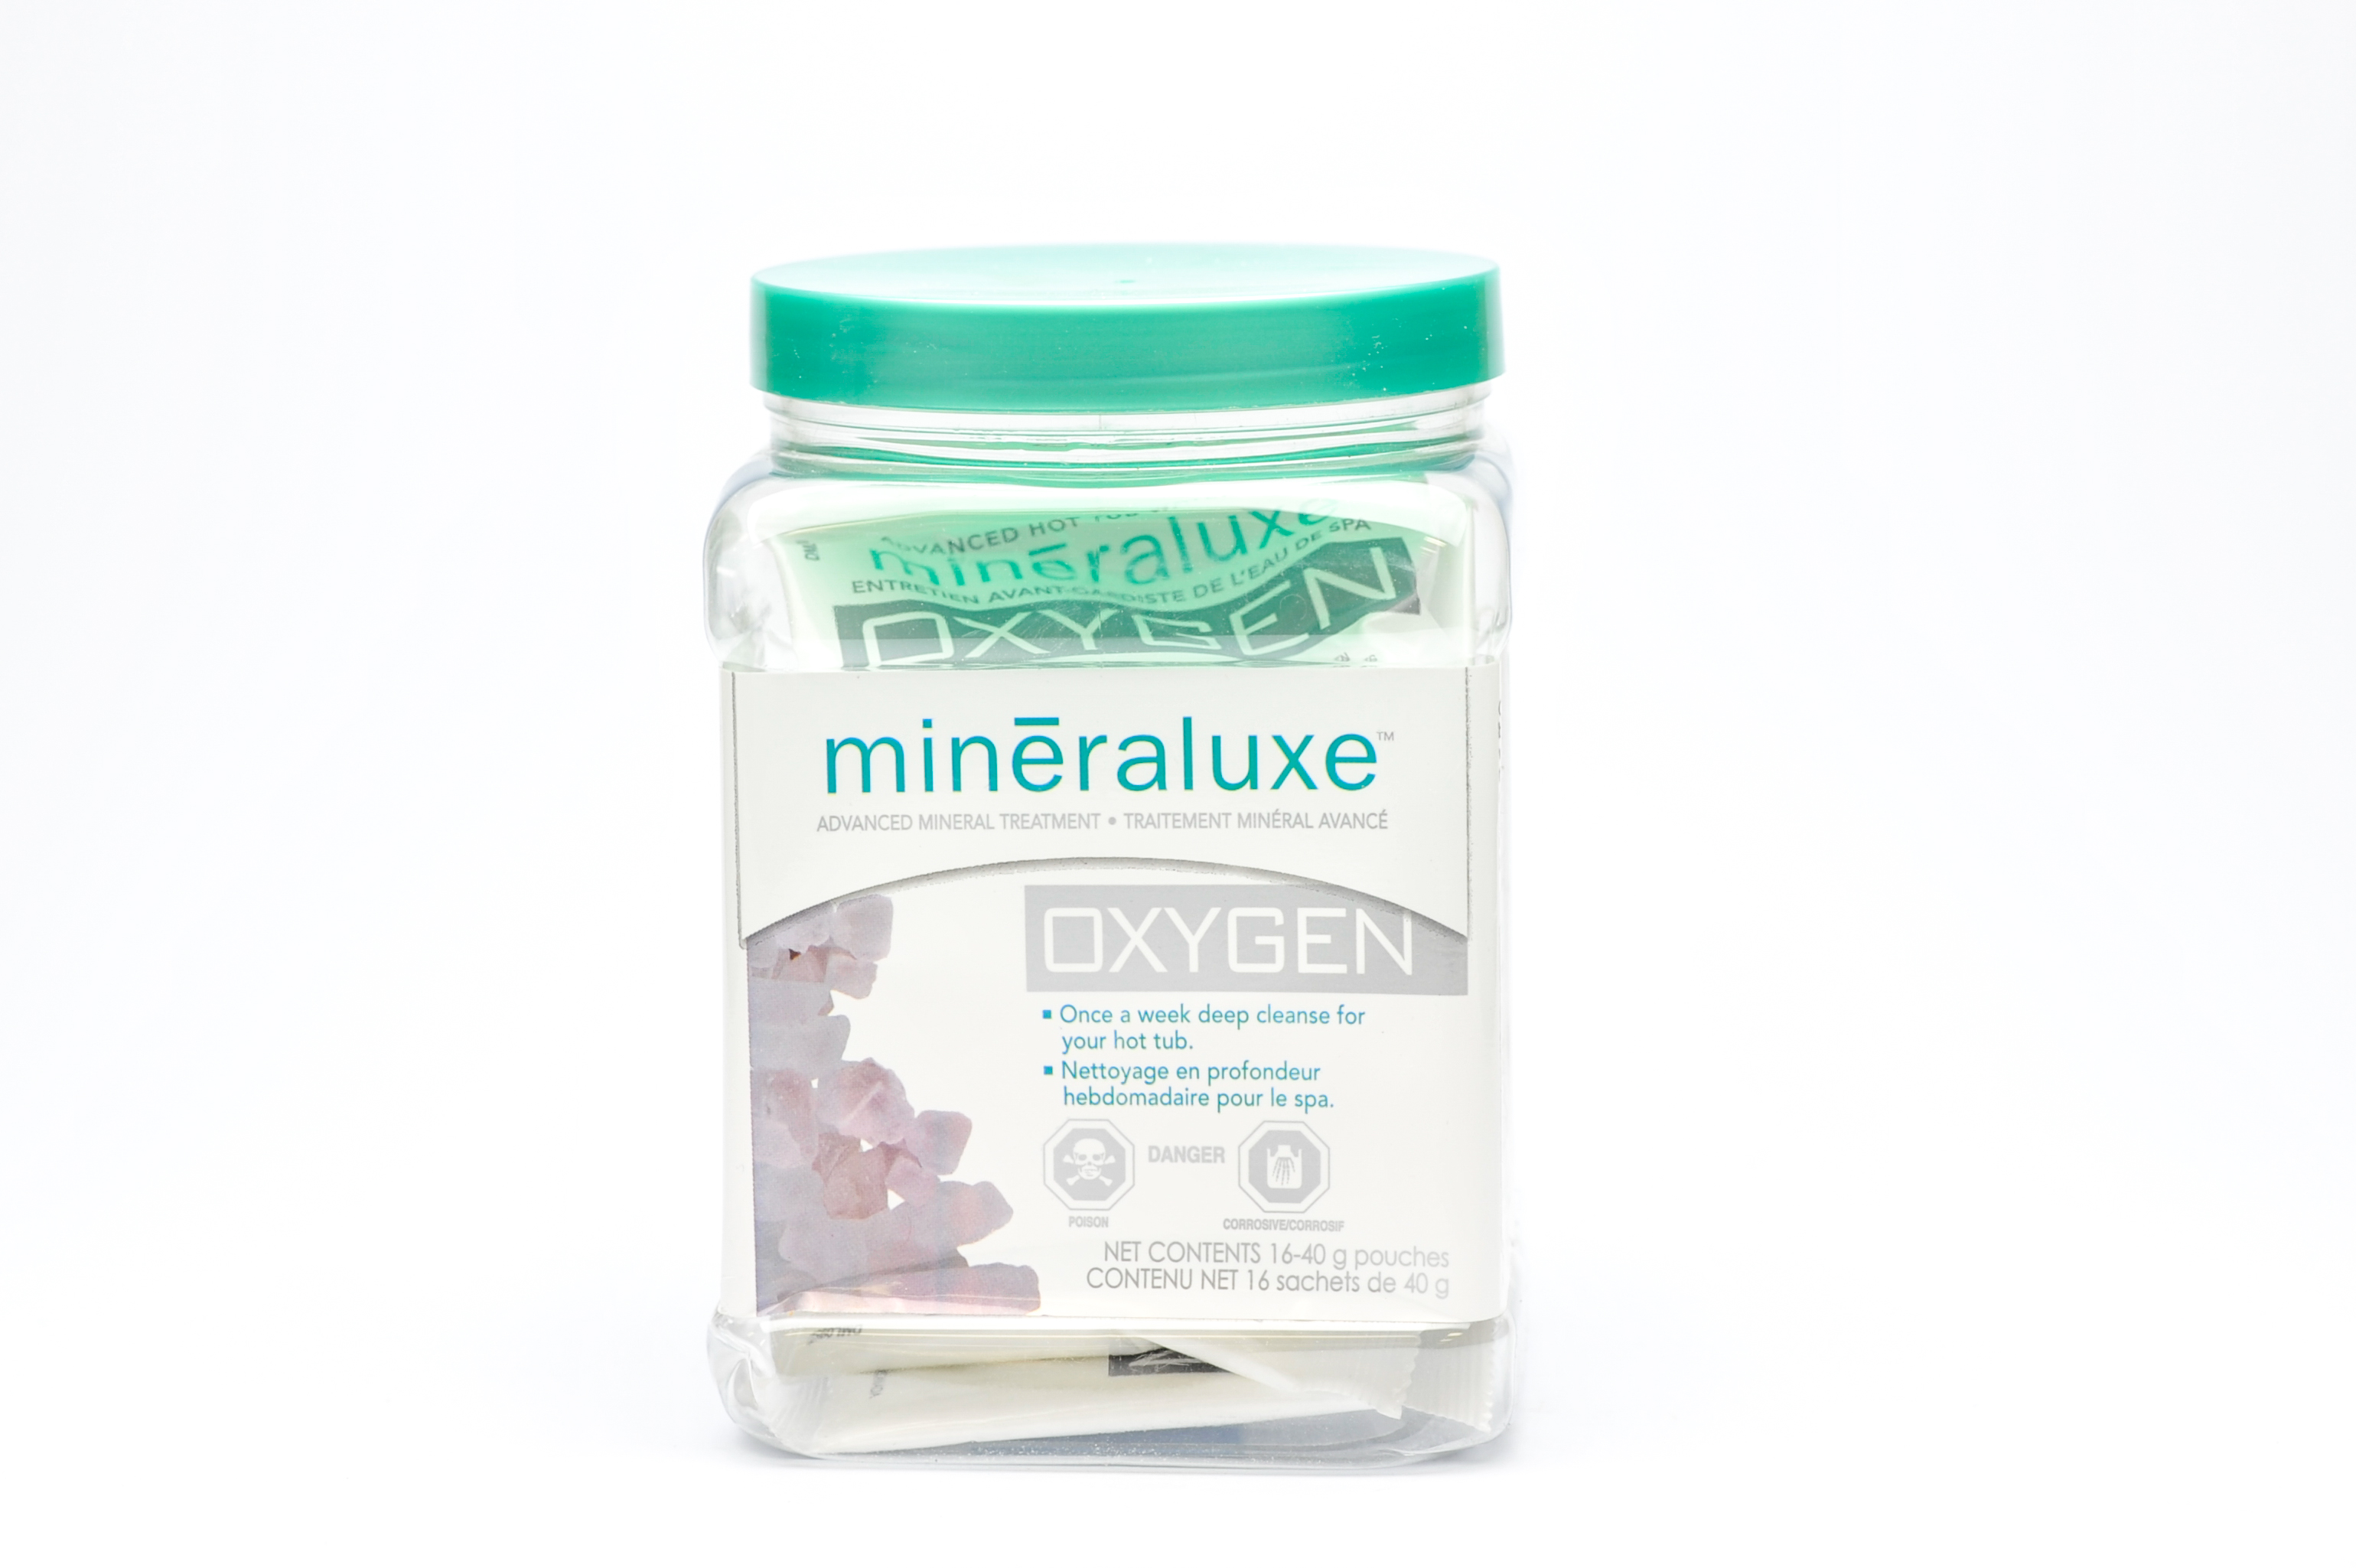 Mineraluxe Oxygen Plus 8 Per Case - UNDEFINED